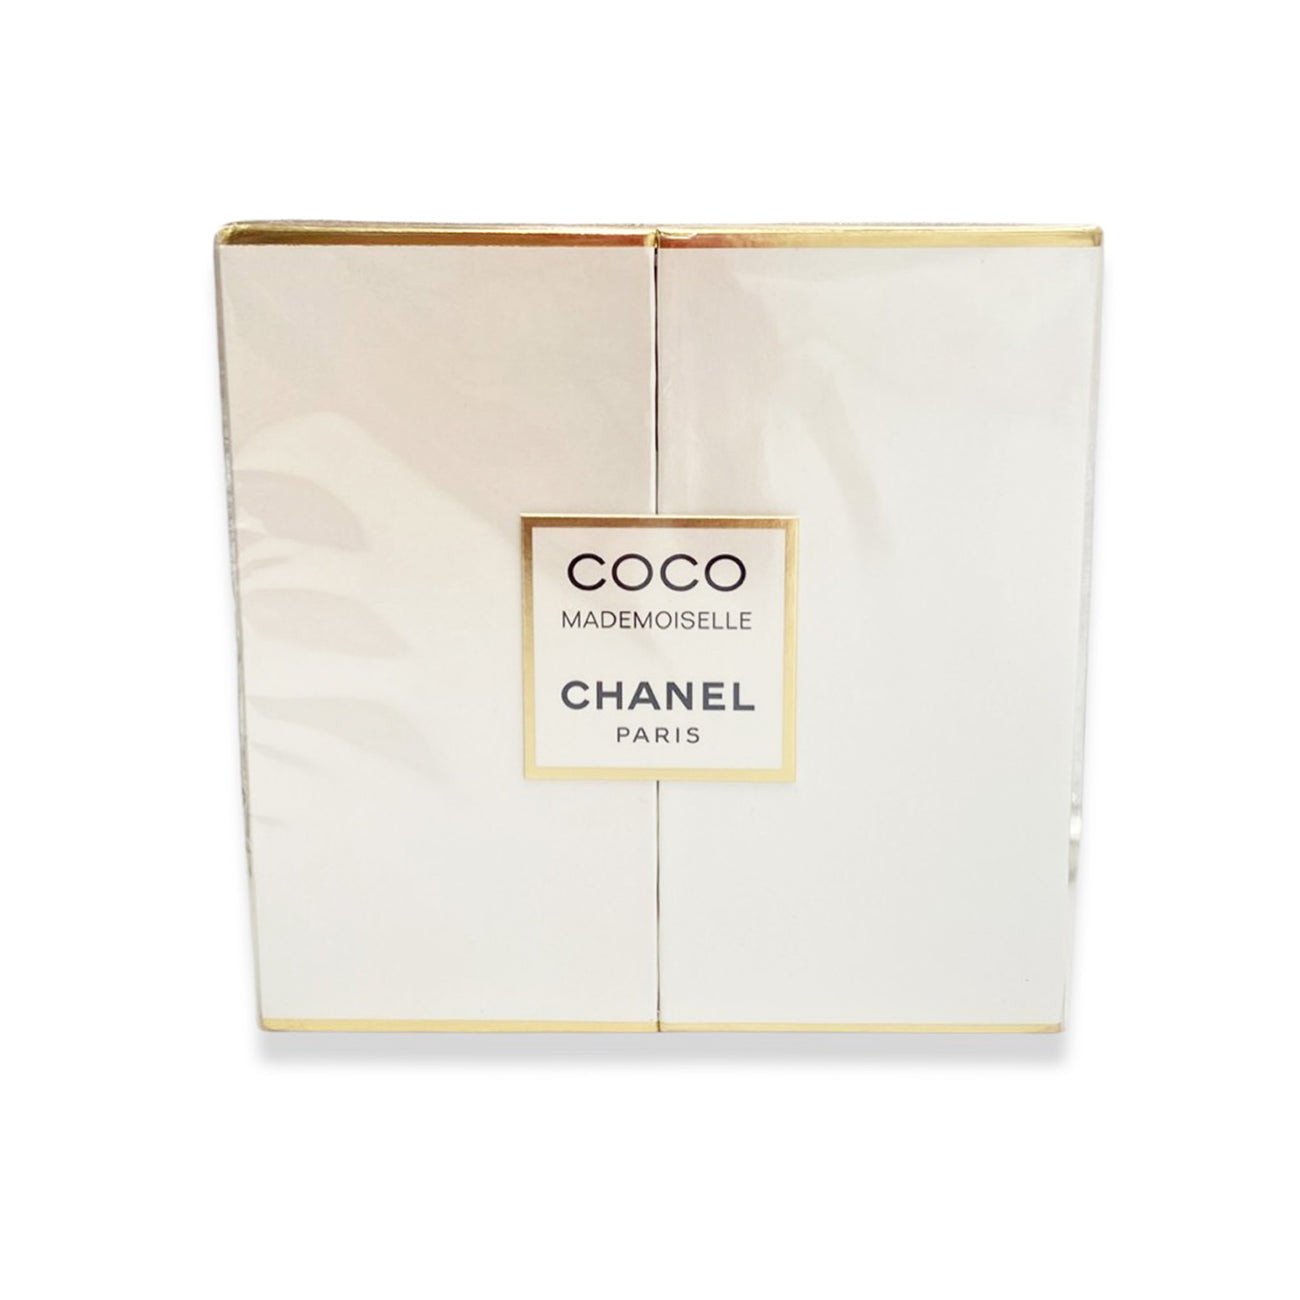 coco chanel gift set mademoiselle